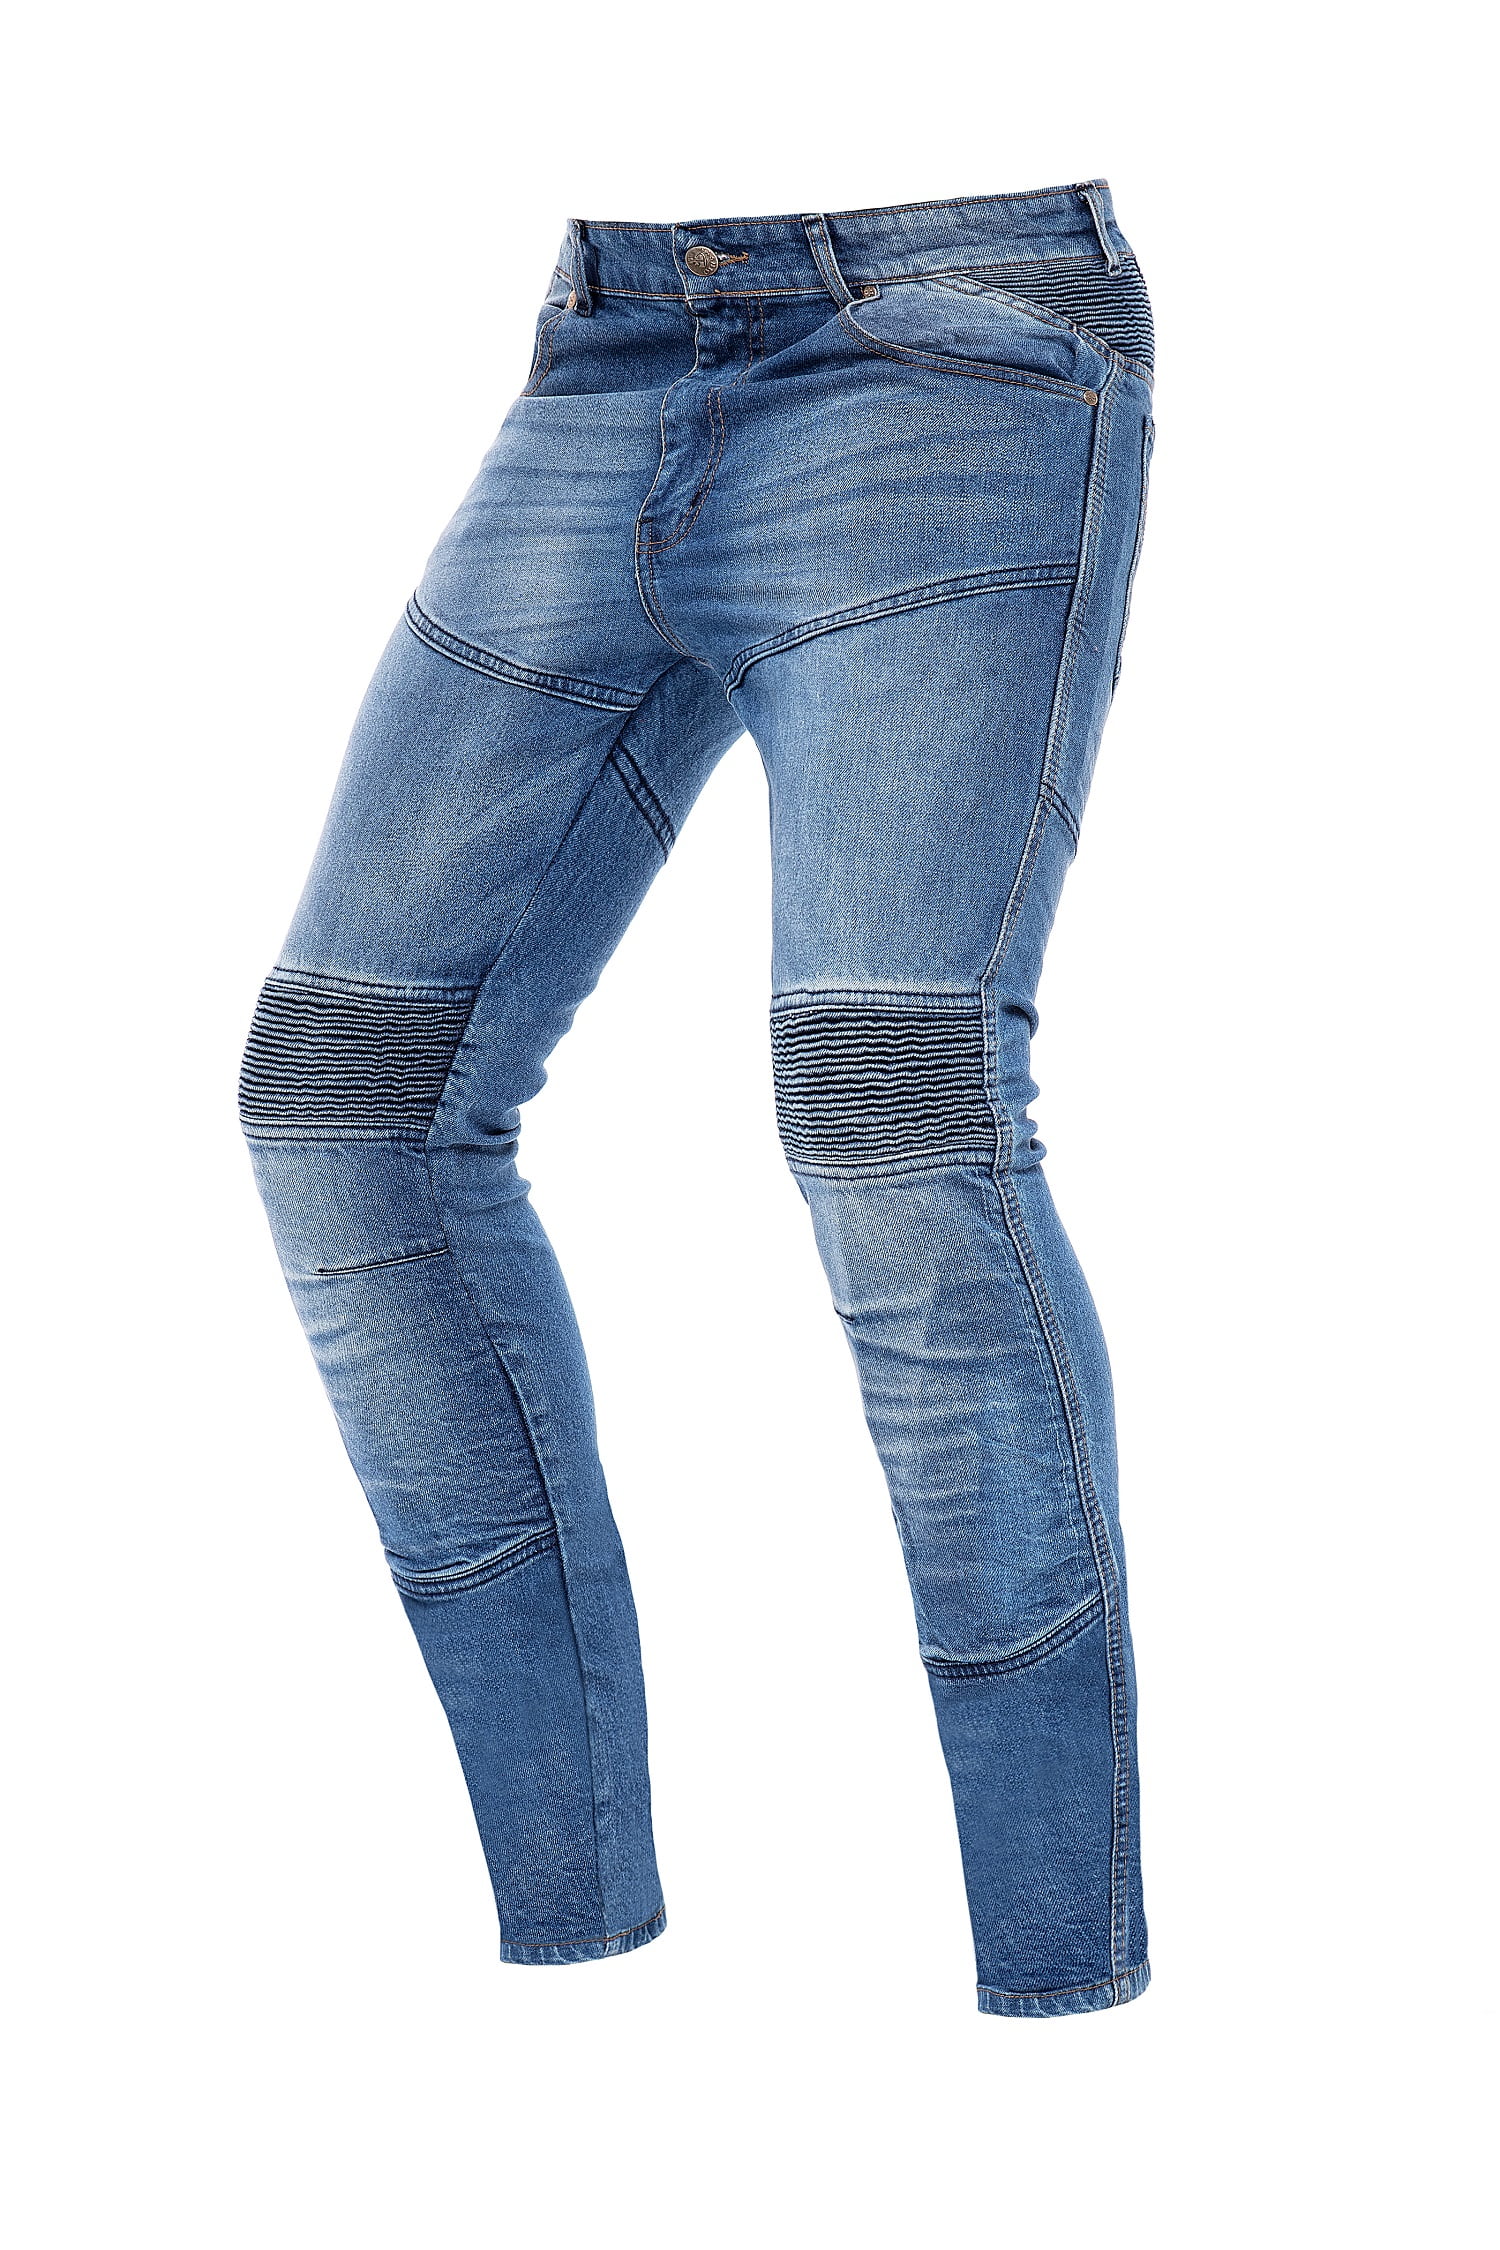 Men Motorcycle Jeans Reinforced Jeans Made With DuPont™ Kevlar® Biker Pants Blue 